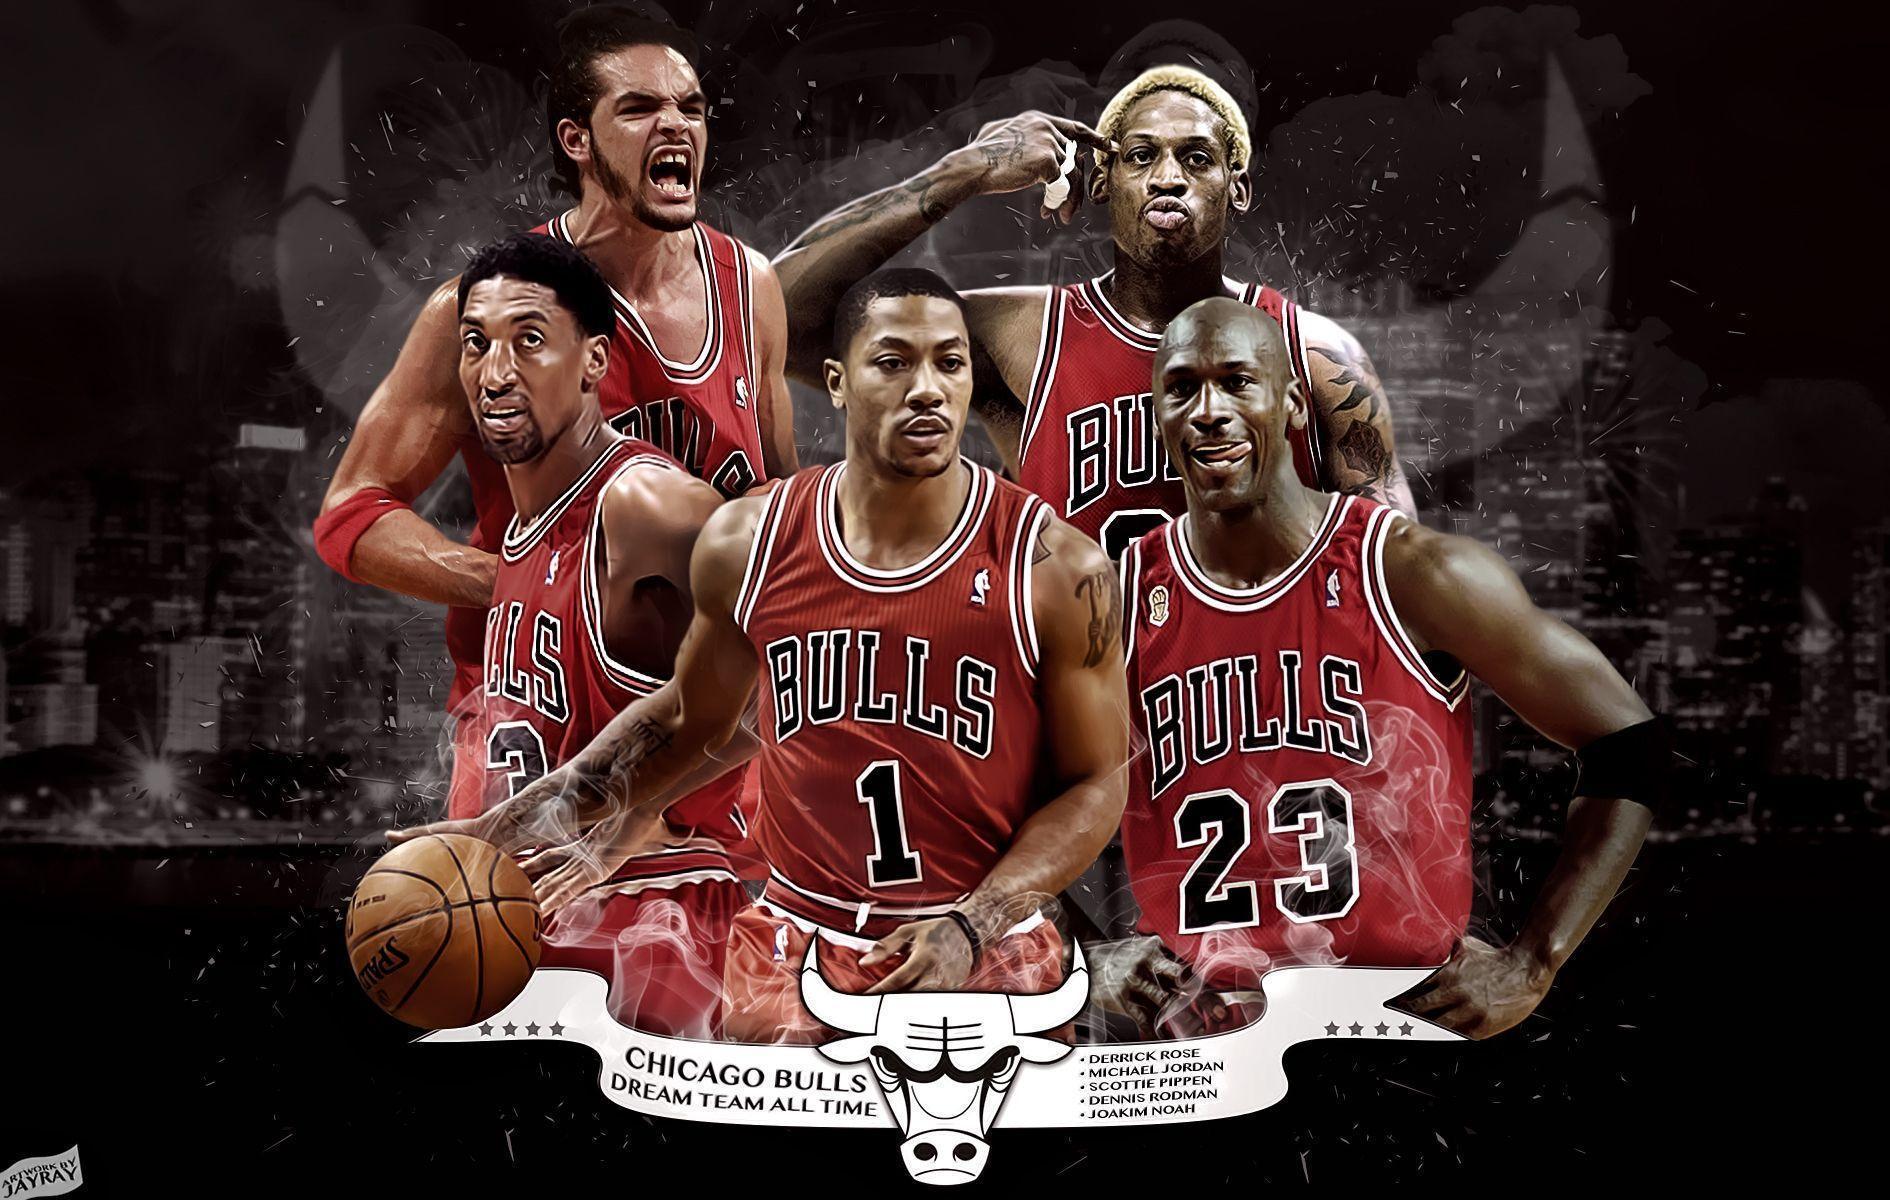 HD Chicago Bulls Background. Wallpaper, Background, Image